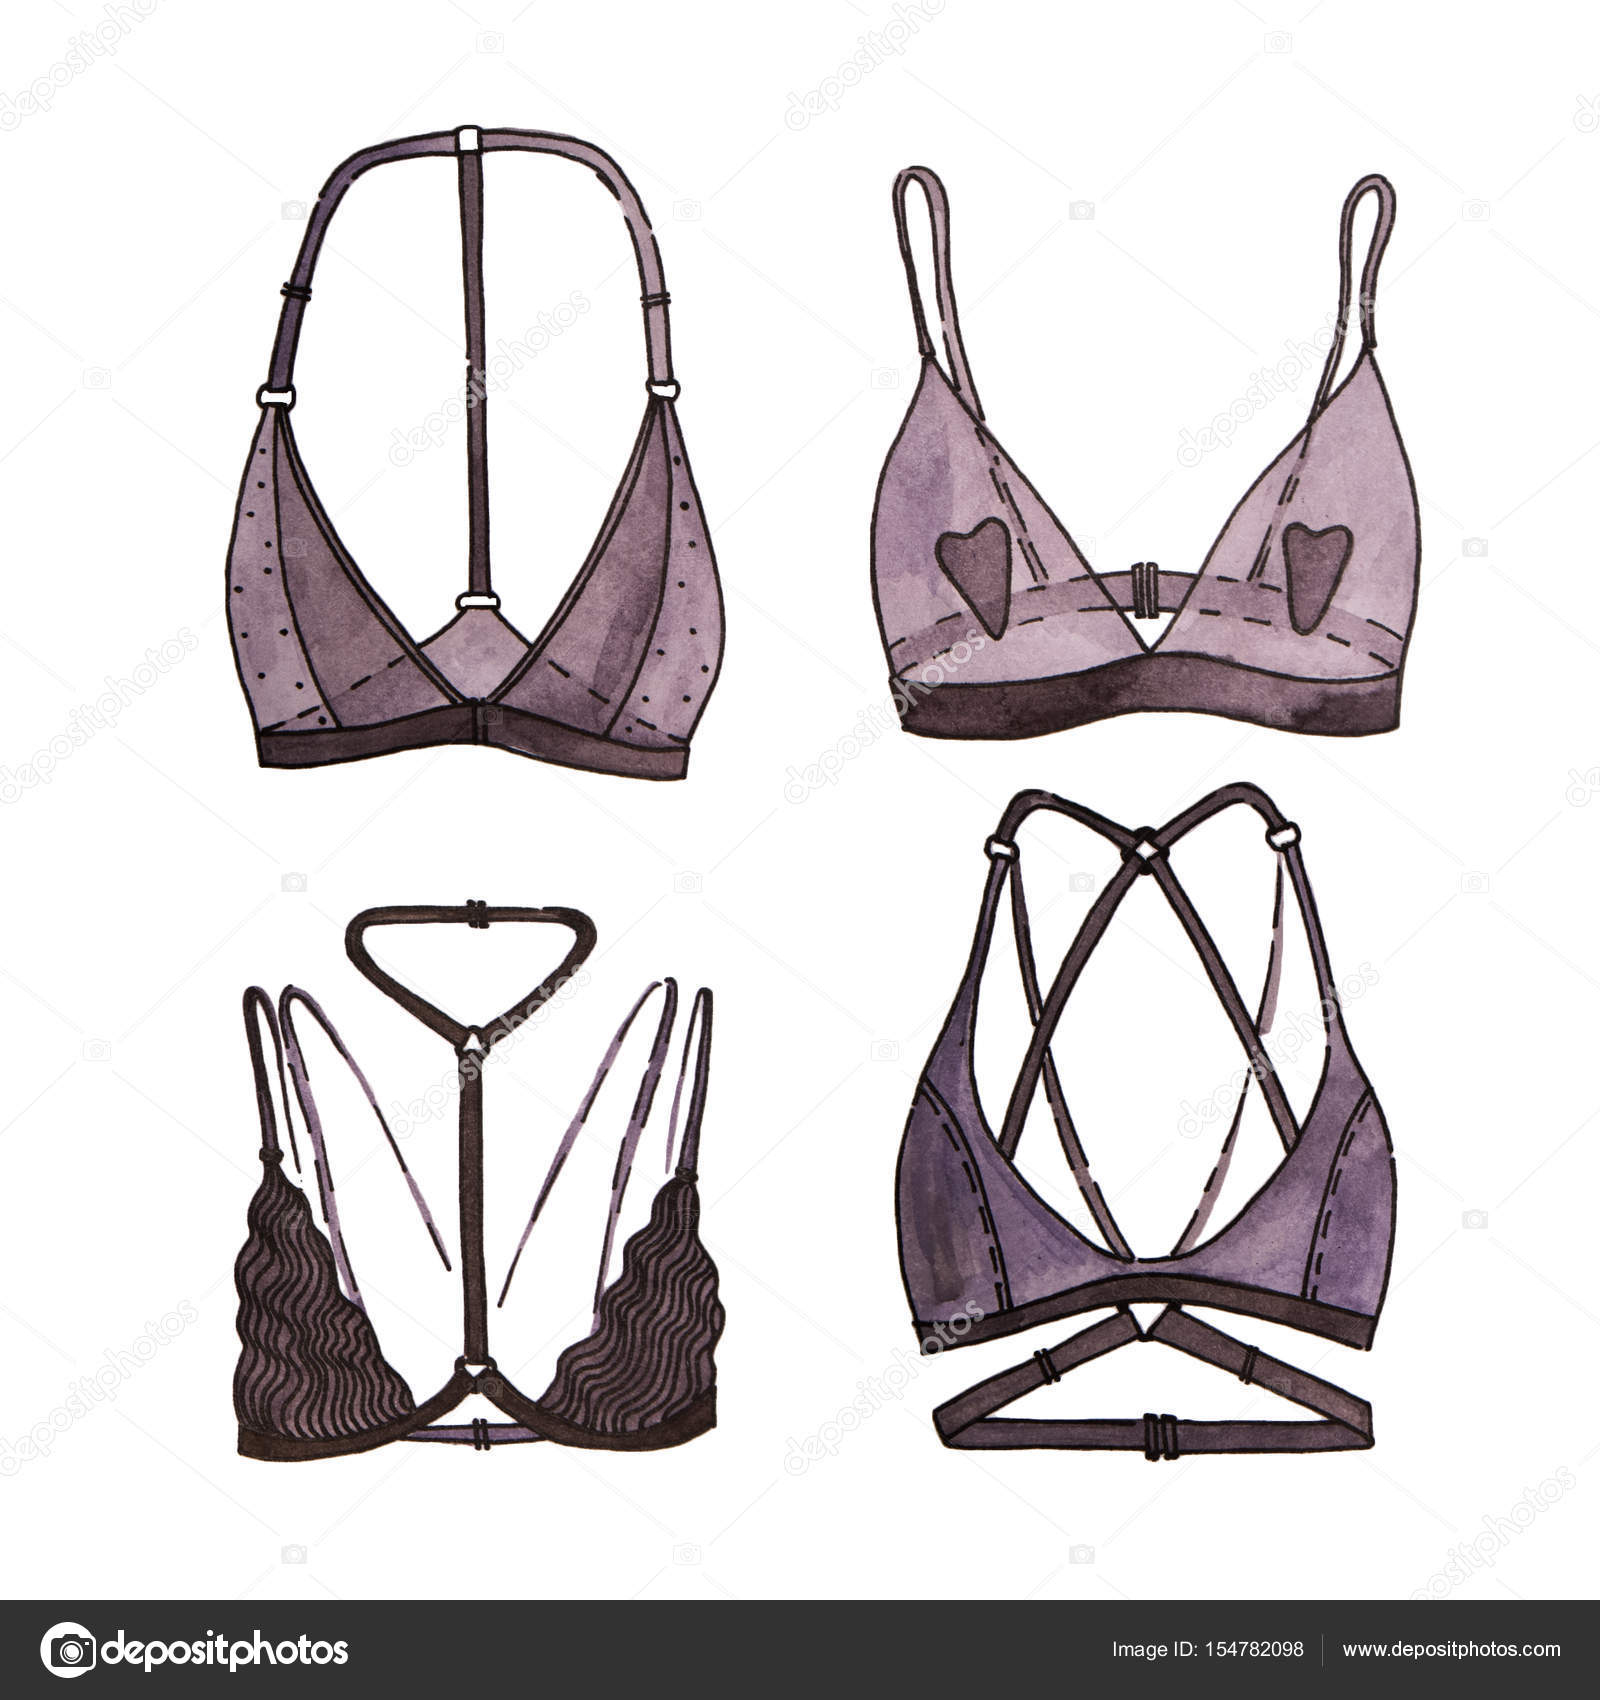 https://st3.depositphotos.com/6436316/15478/i/1600/depositphotos_154782098-stock-illustration-watercolor-bra-set-fashion-brasserie.jpg